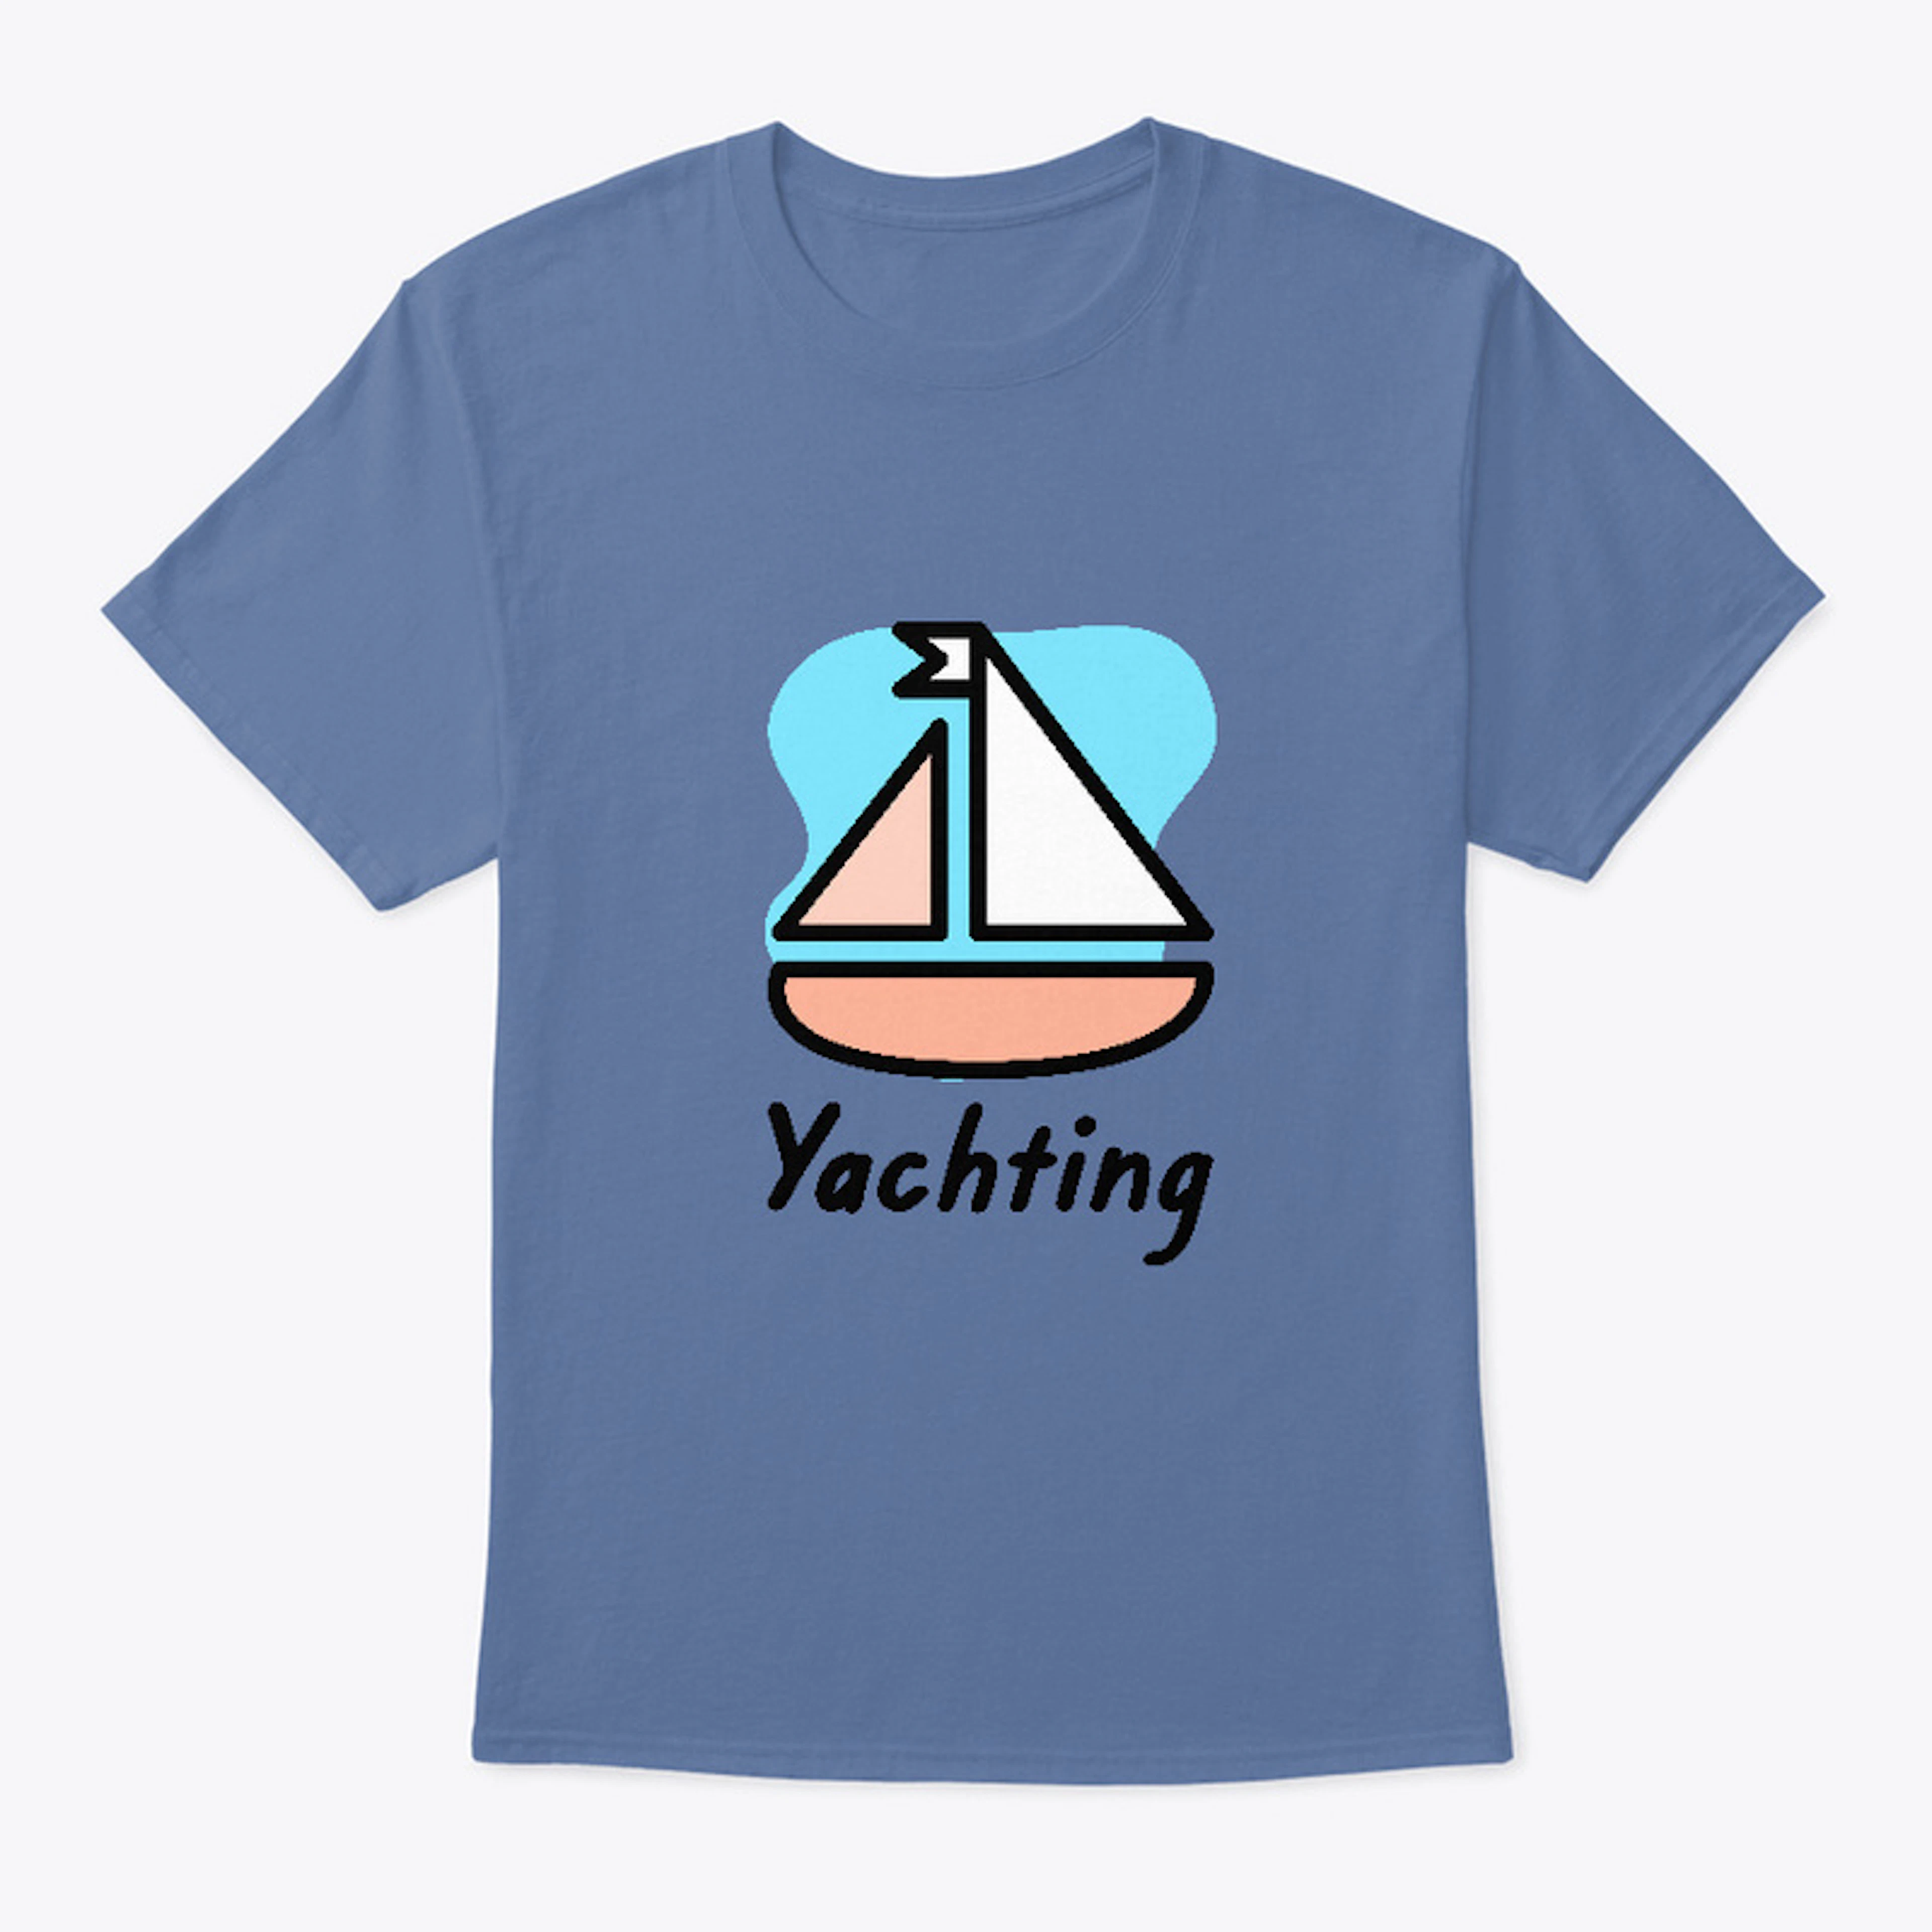 Yachting Boat